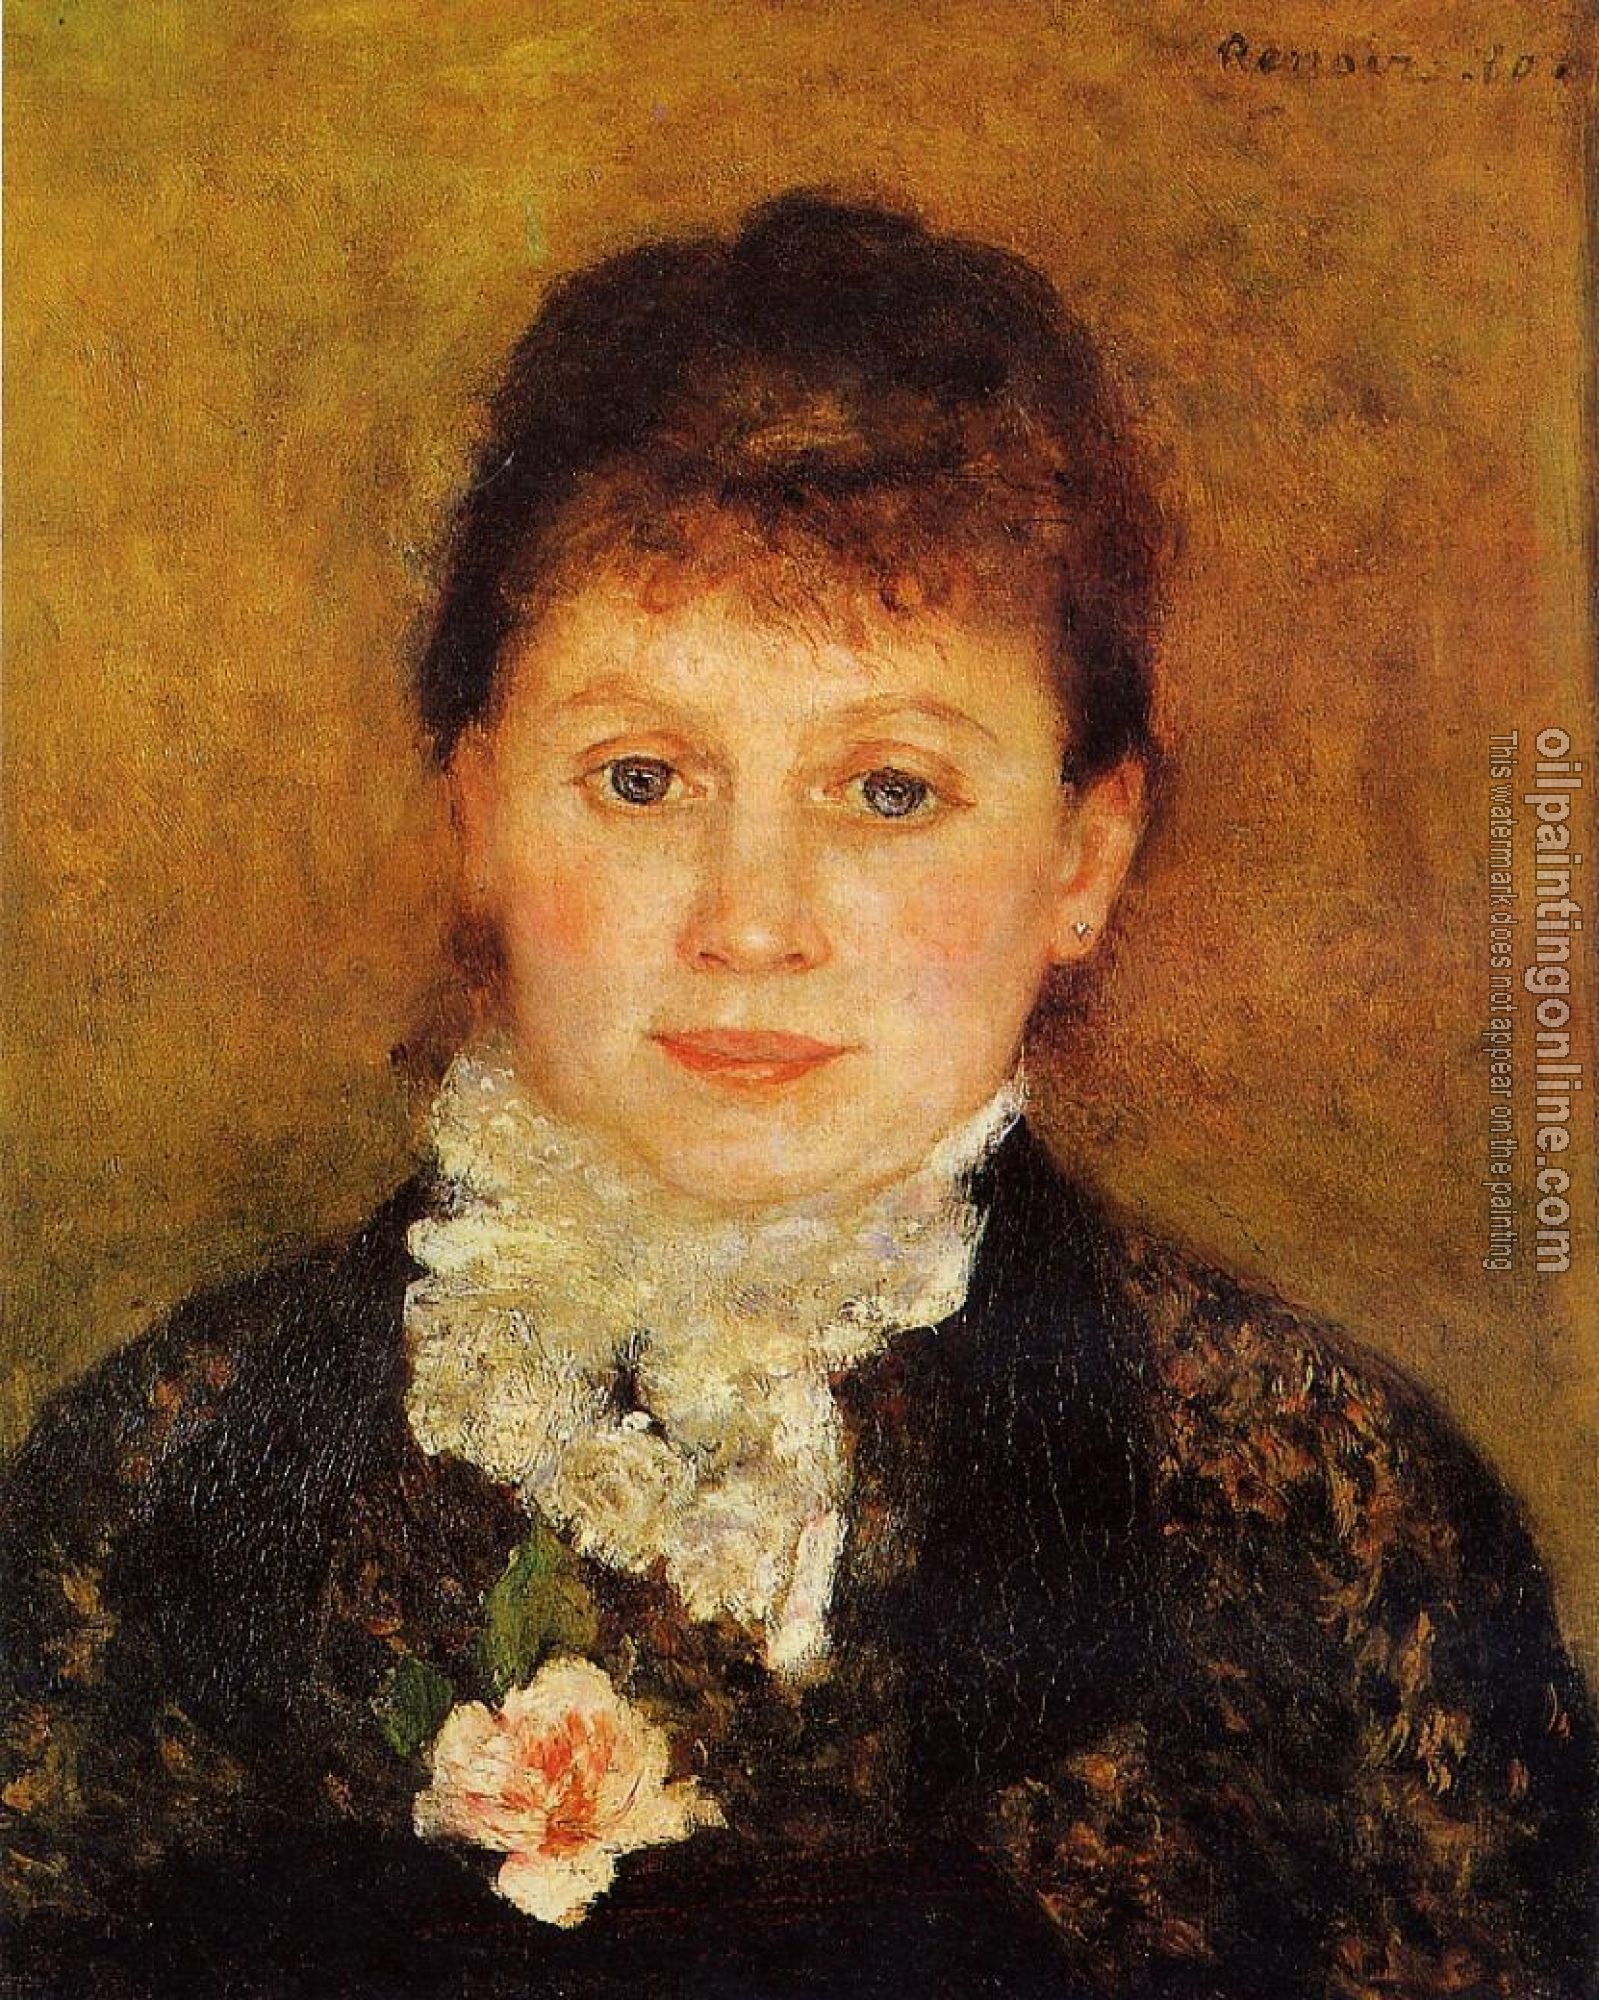 Renoir, Pierre Auguste - Woman Wearing White Frills